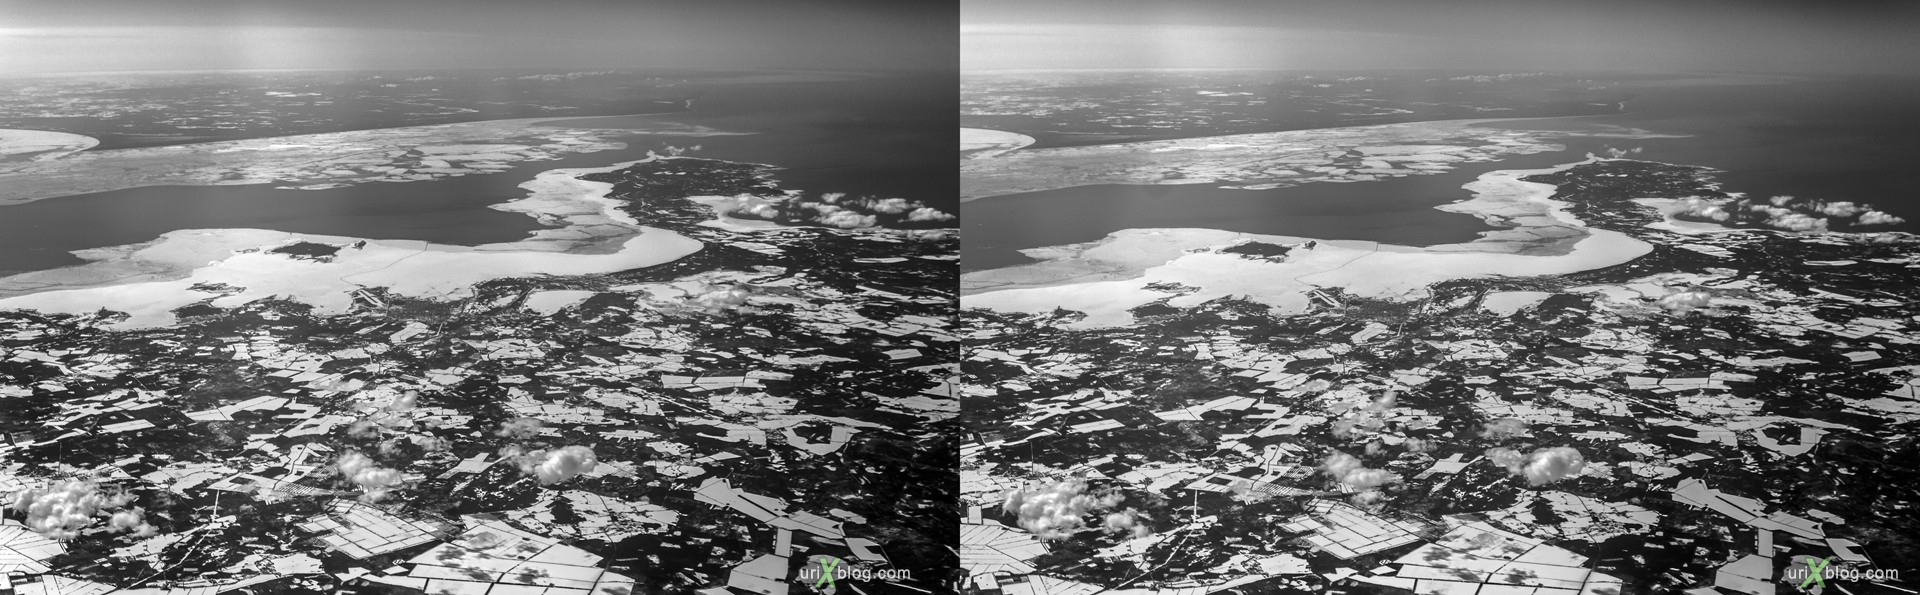 2013, Baltic sea, Gulf of Riga, Saaremaa island, Estonia, panorama, airplane, black and white, bw, snow, ice, clouds, horizon, 3D, stereo pair, cross-eyed, crossview, cross view stereo pair, stereoscopic